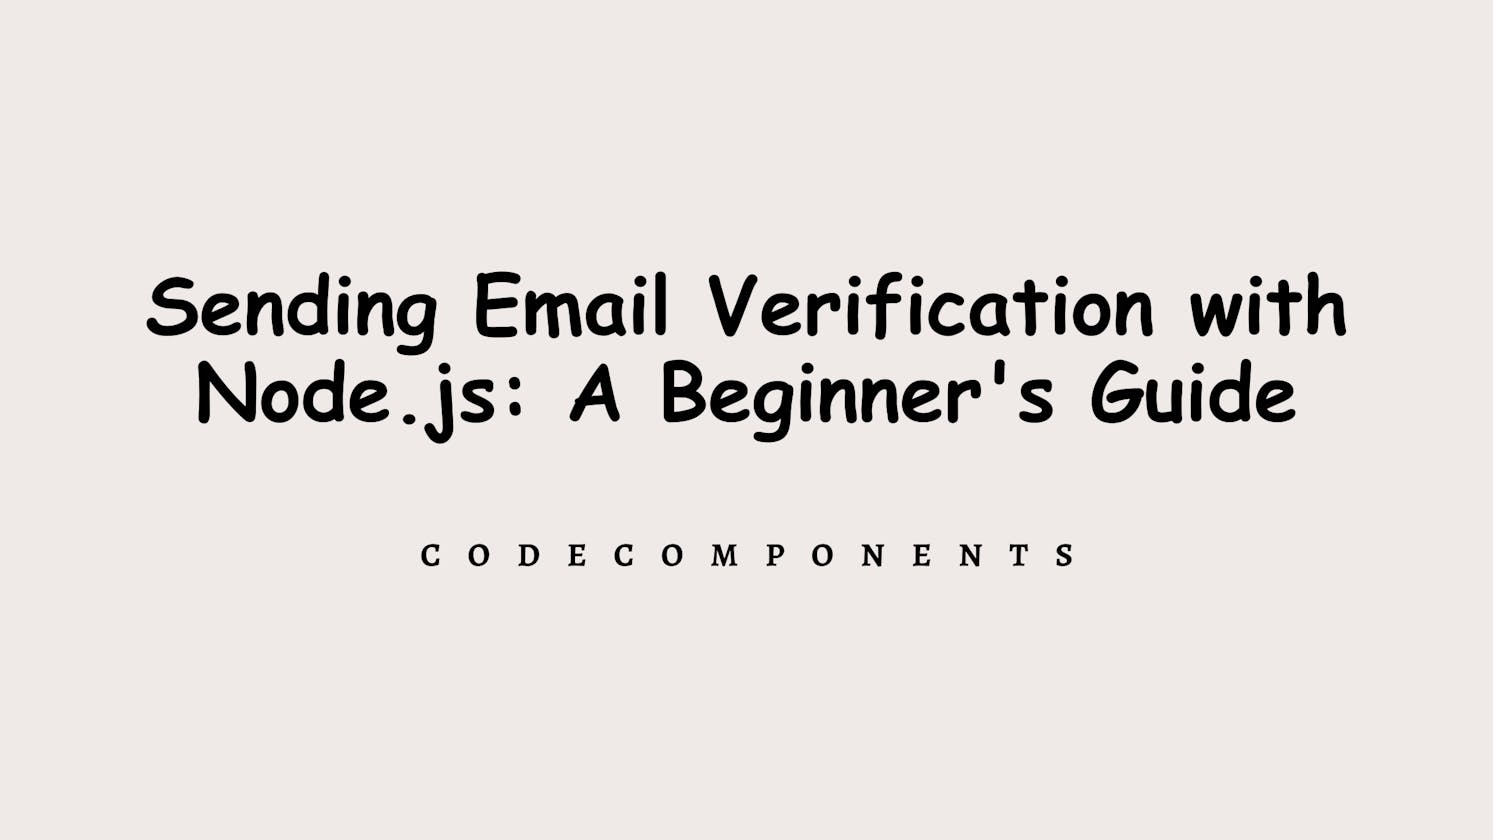 Sending Email Verification with Node.js: A Beginner's Guide